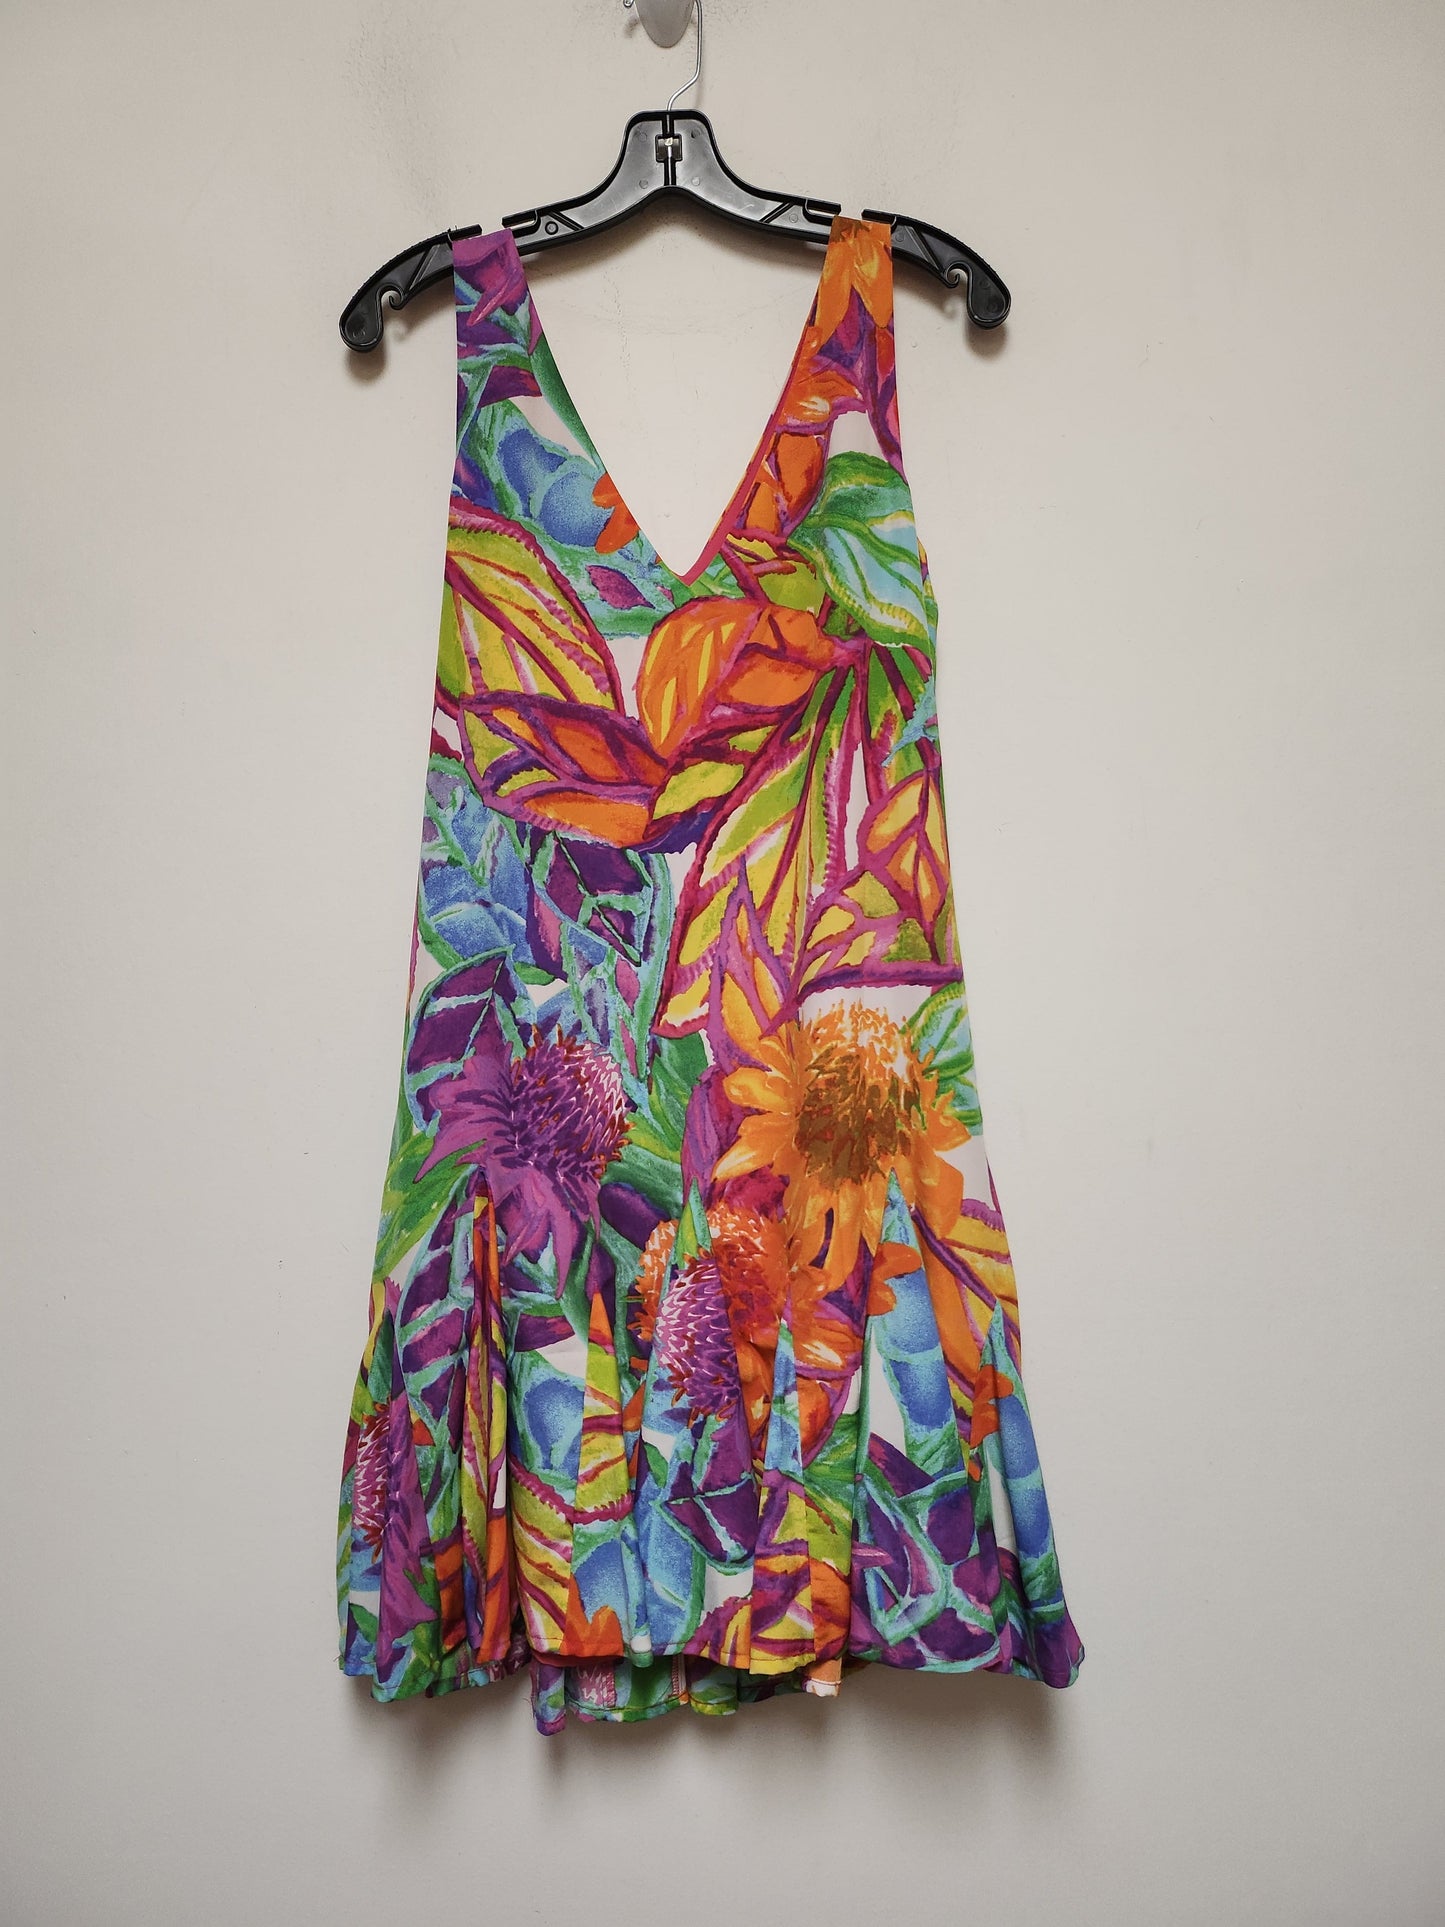 Dress Casual Short By Lauren By Ralph Lauren  Size: M